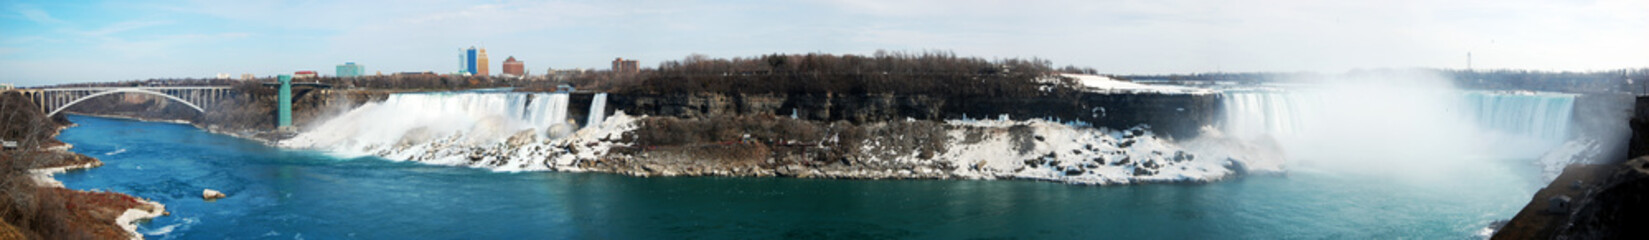 Niagara Falls panorama including Rainbow Bridge, American Falls and Horseshoe Falls from left to...